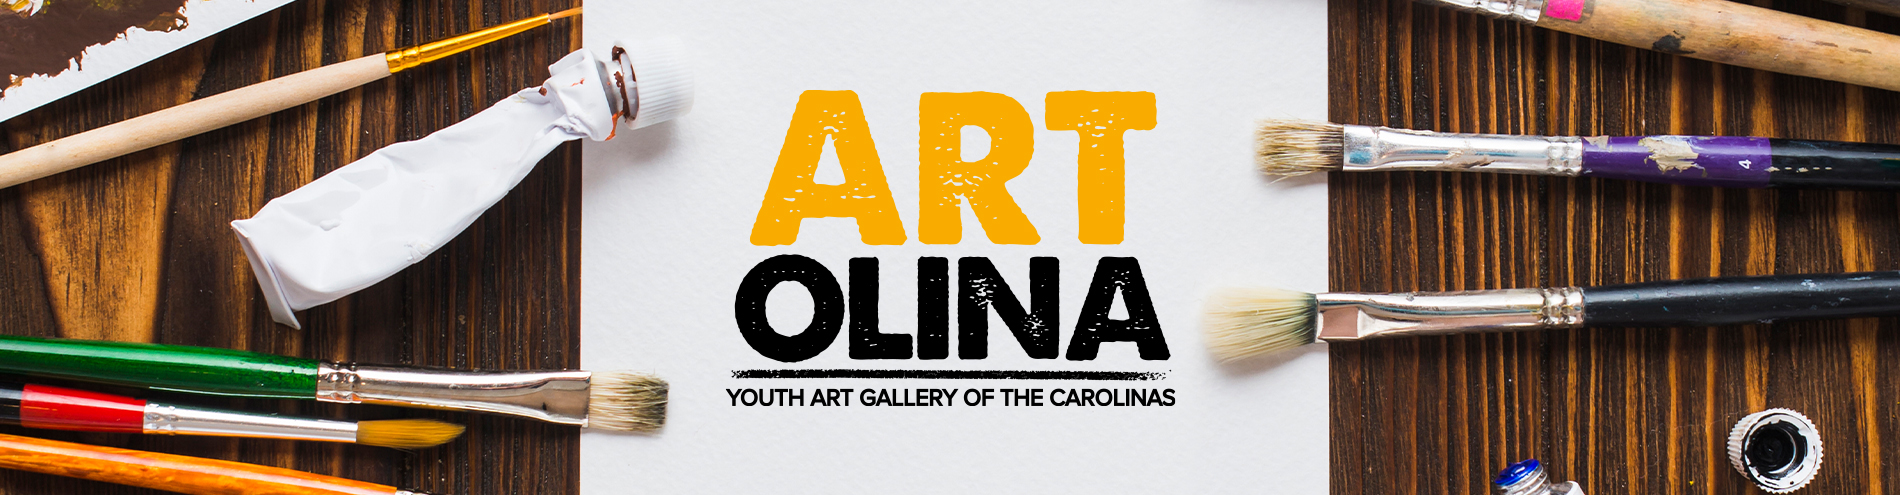 ART-OLINA Art Contest Header